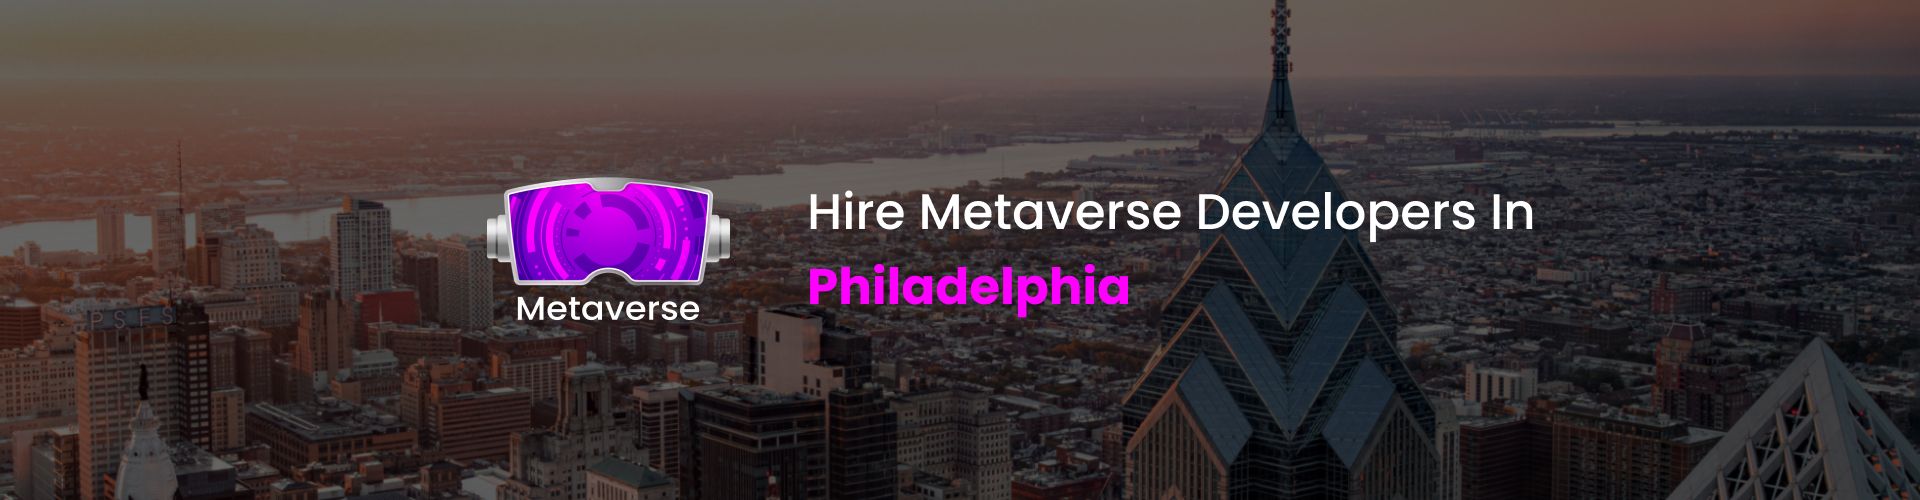 hire metaverse developers in philadelphia